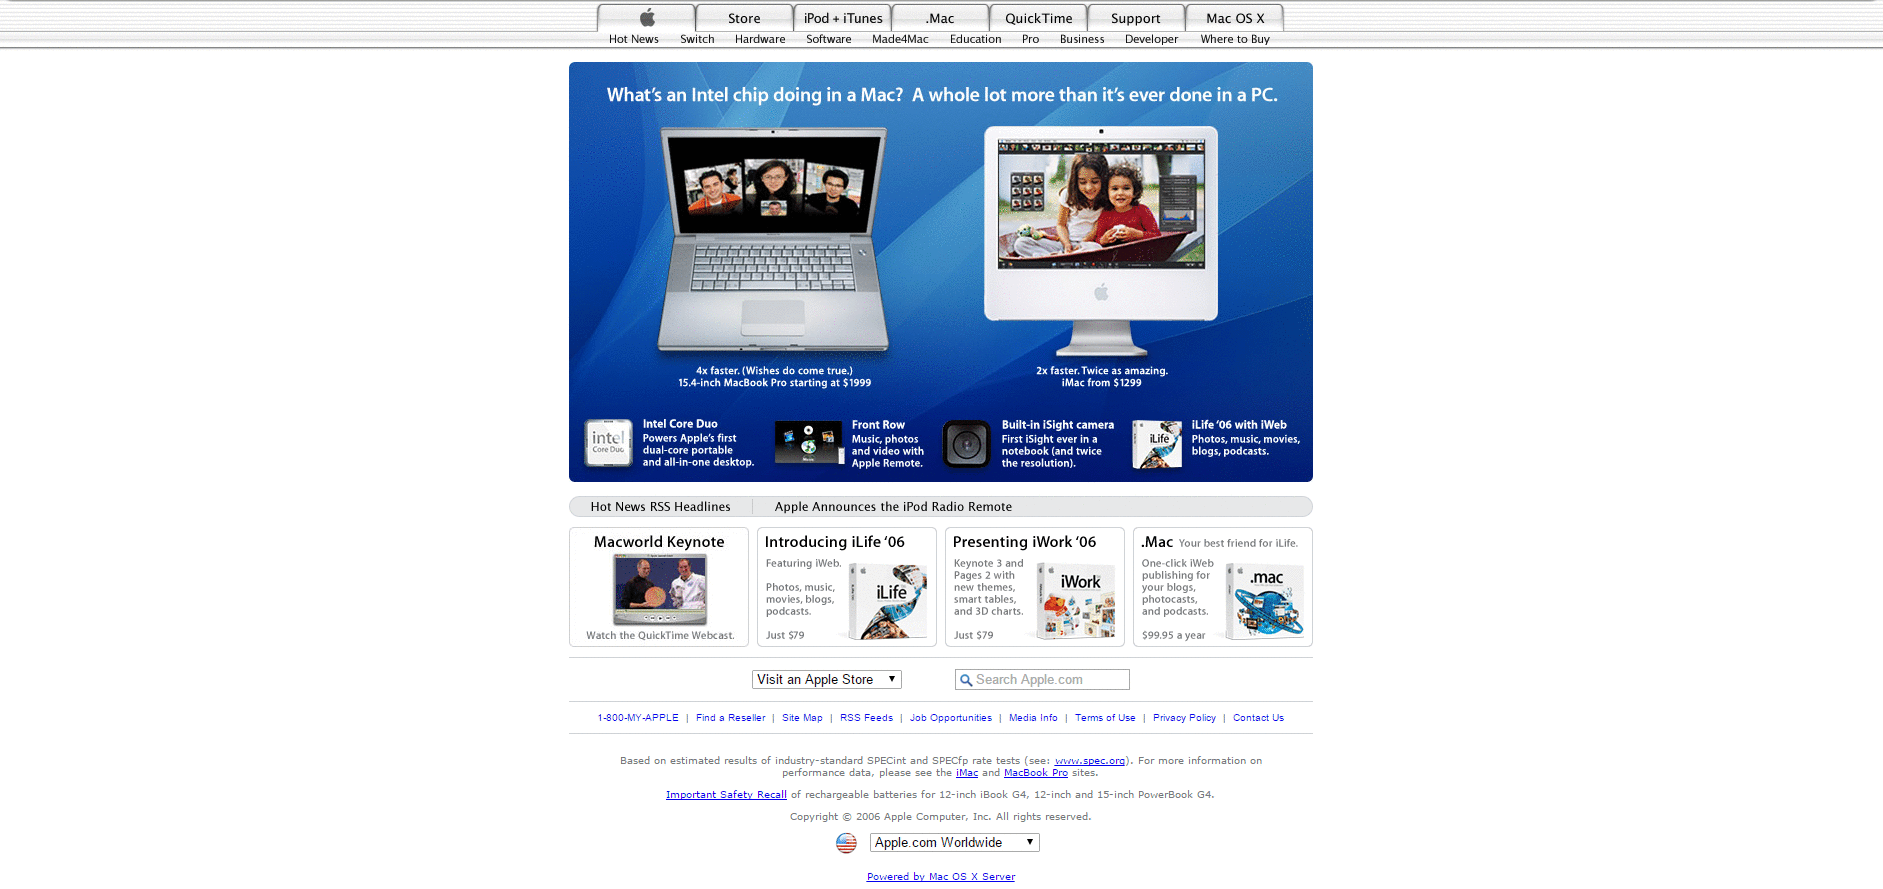 apple.com Website Design in 2006